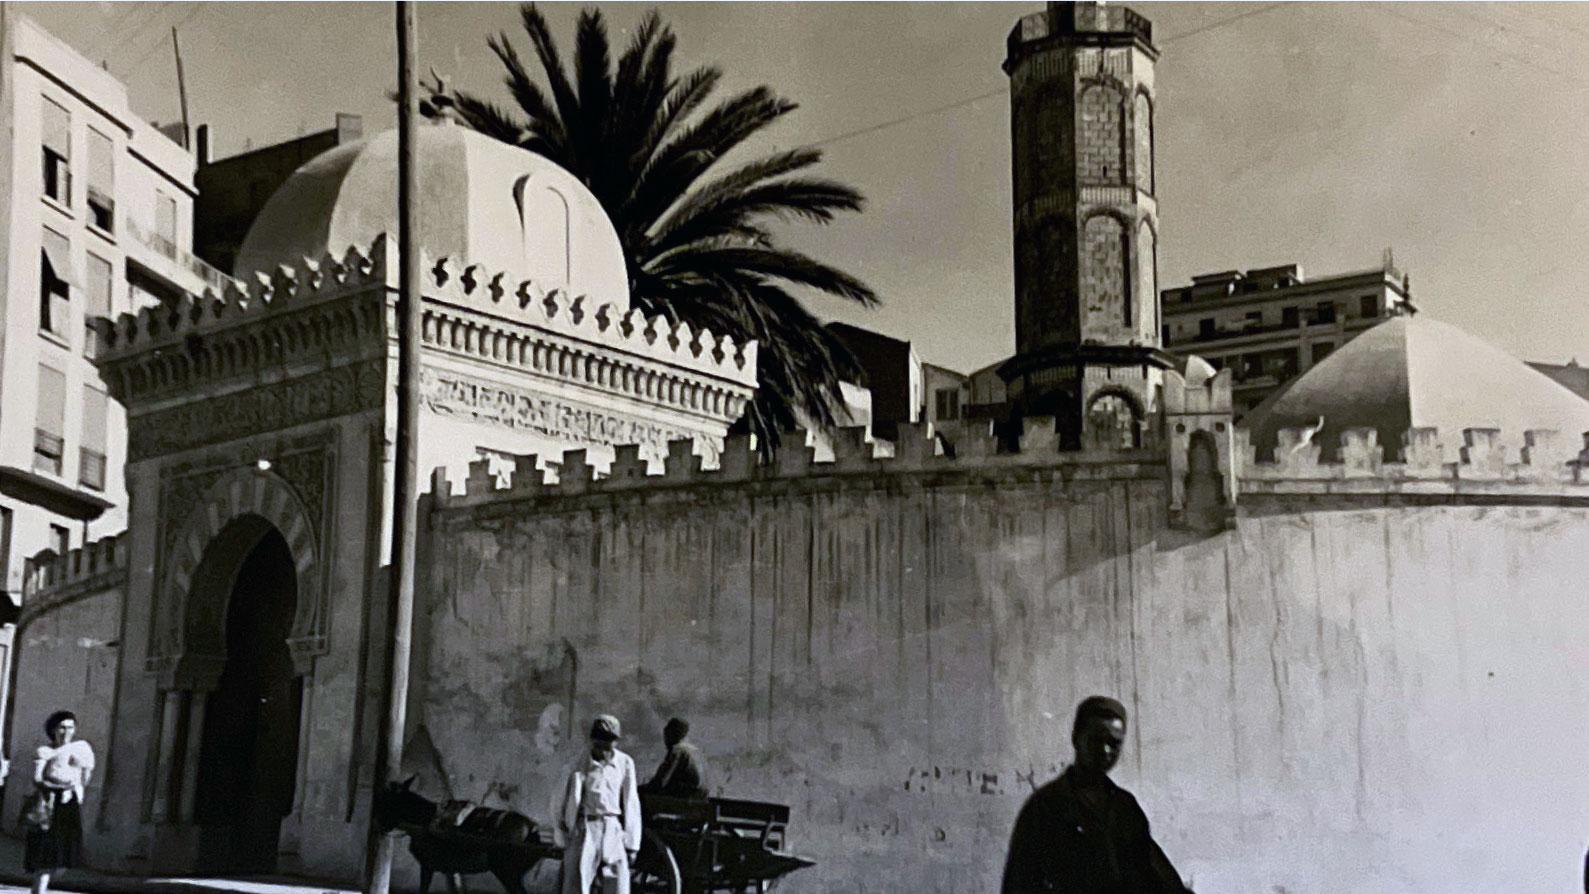 A street scene in Algeria. Manuel E. Lichtenstein spent five months training in North Africa before heading to Italy.